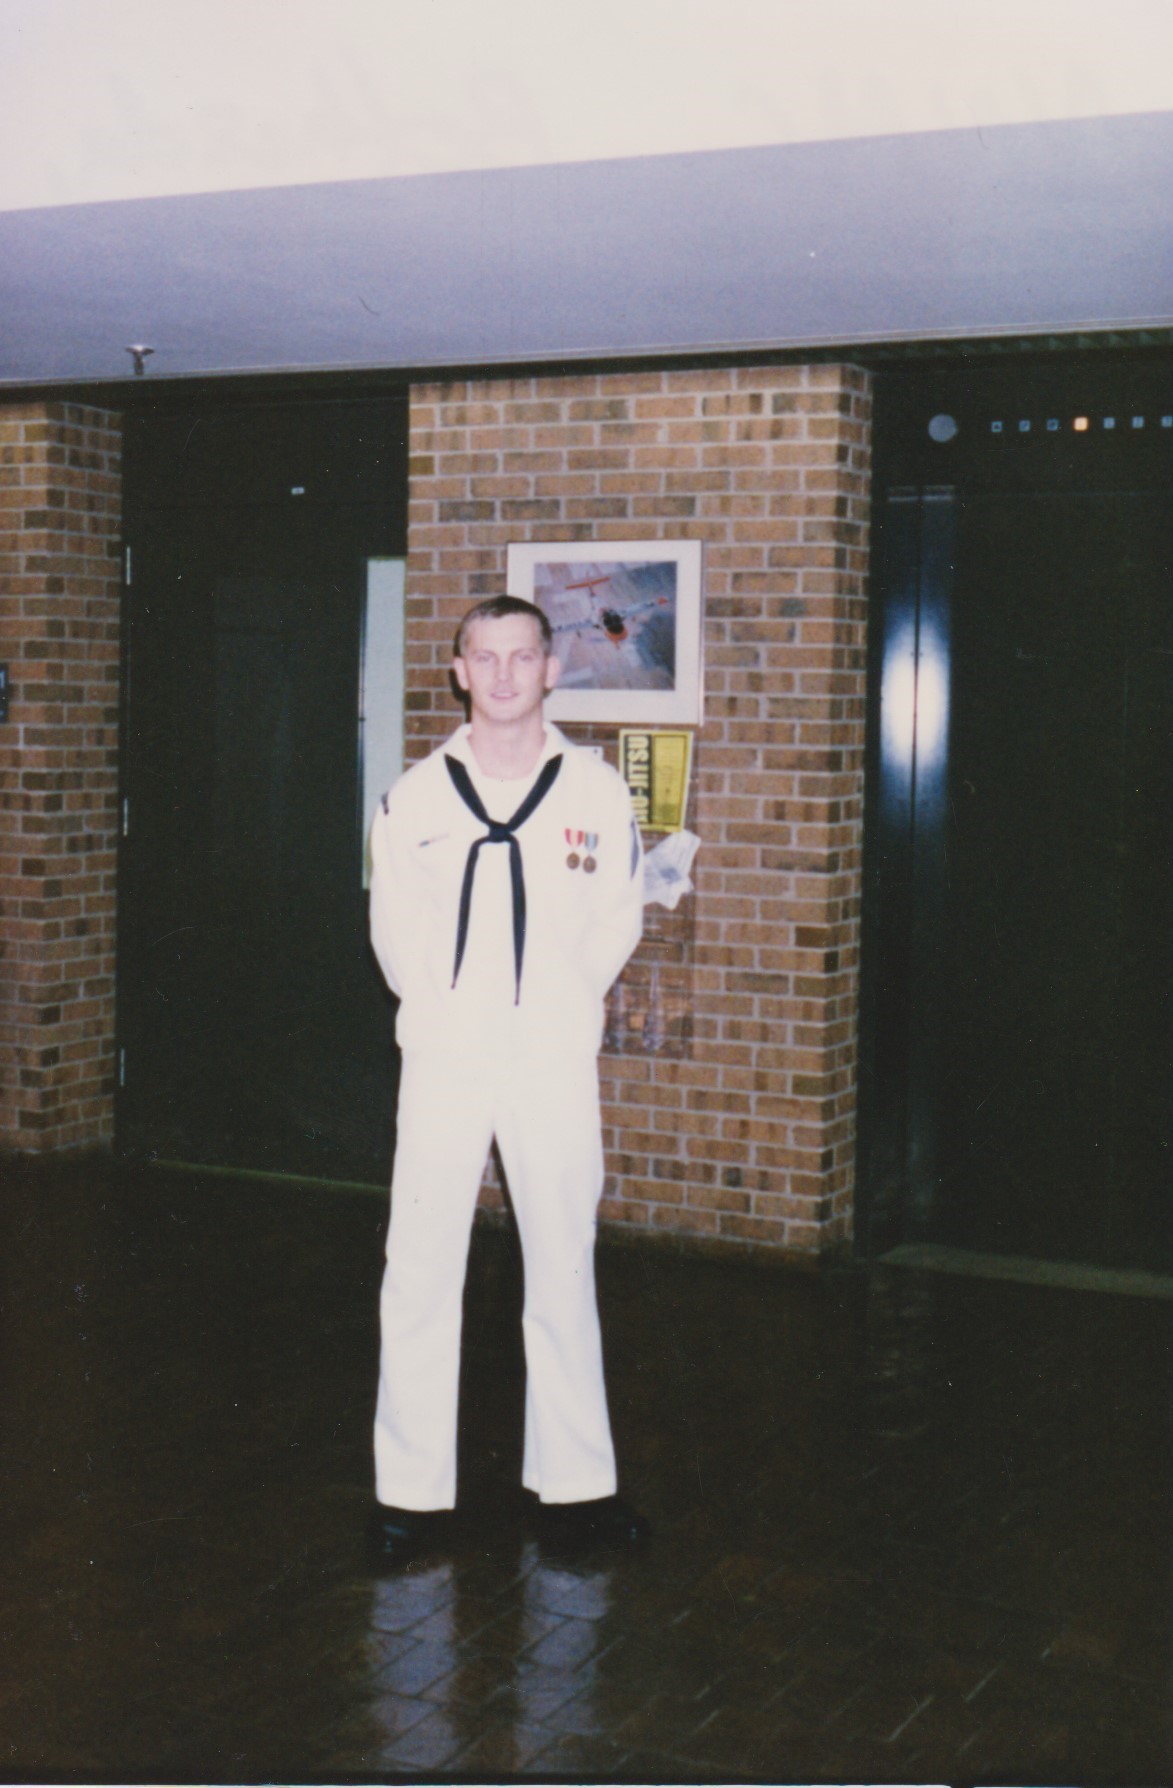 Corps School Graduation
Balboa Hospital
San Diego, CA 1994.